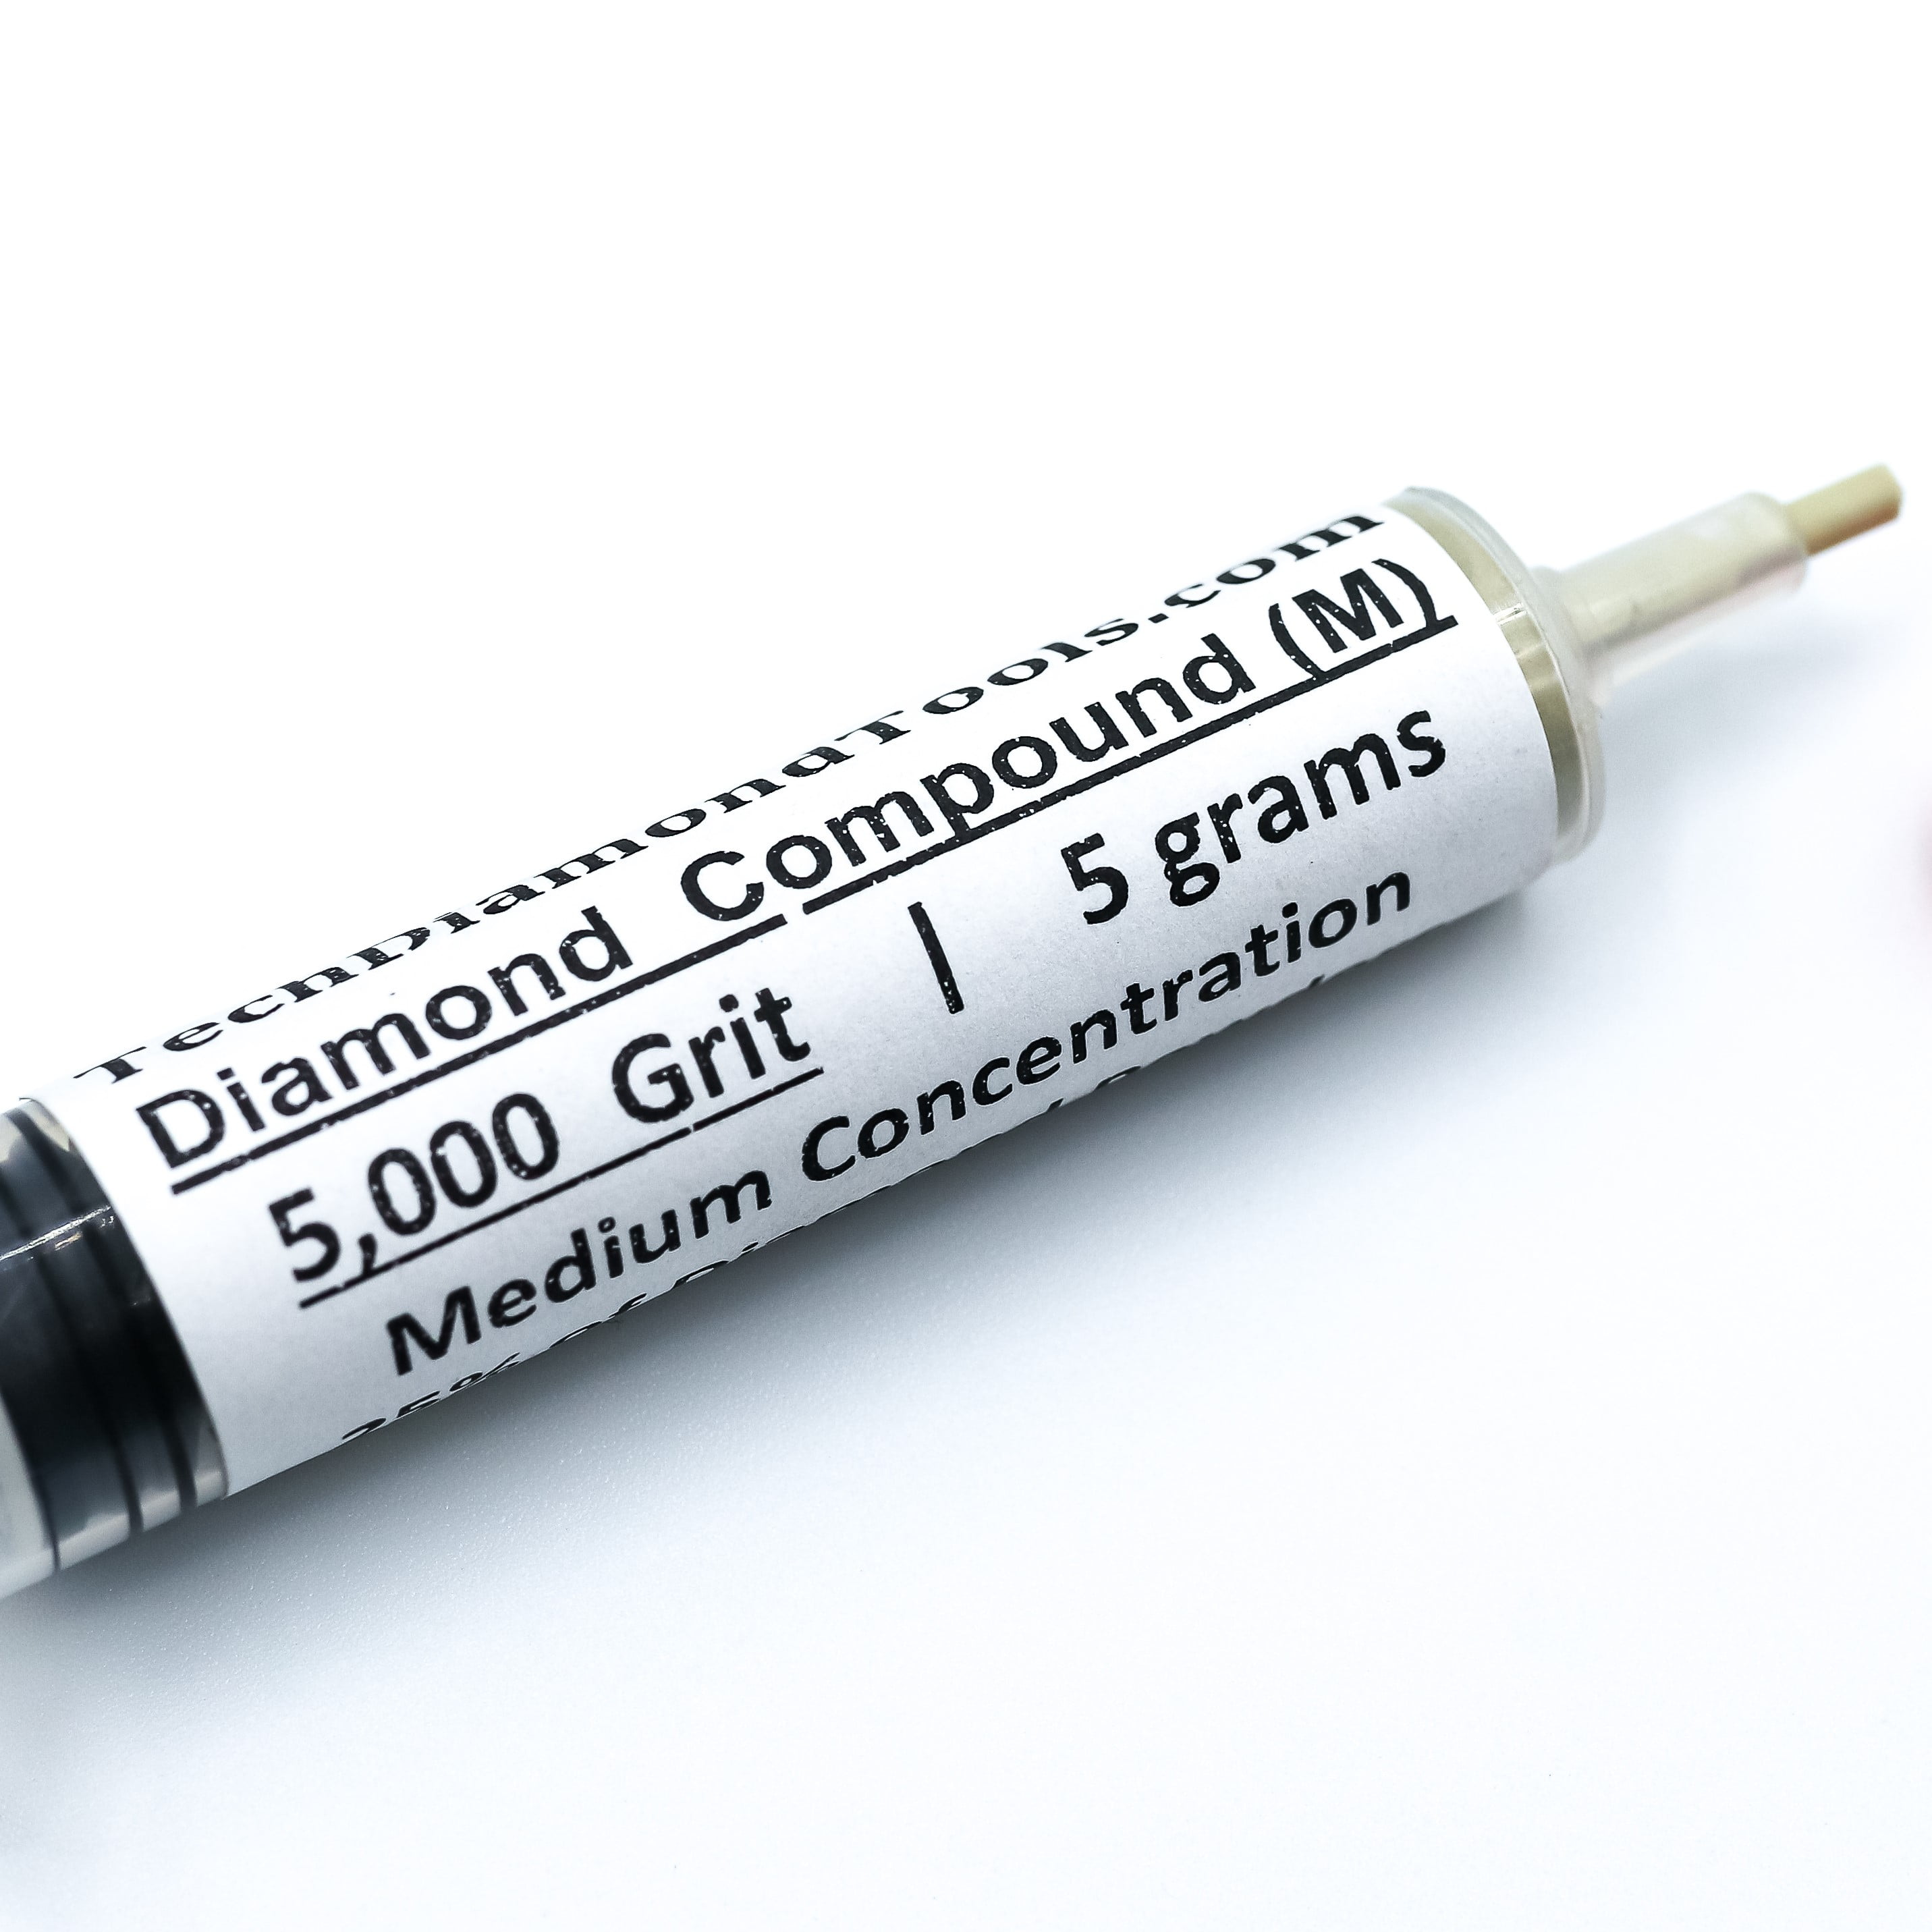 TechDiamondTools Diamond Powder 8.000 Grit 0-2 Microns 100cts,=20 Grams